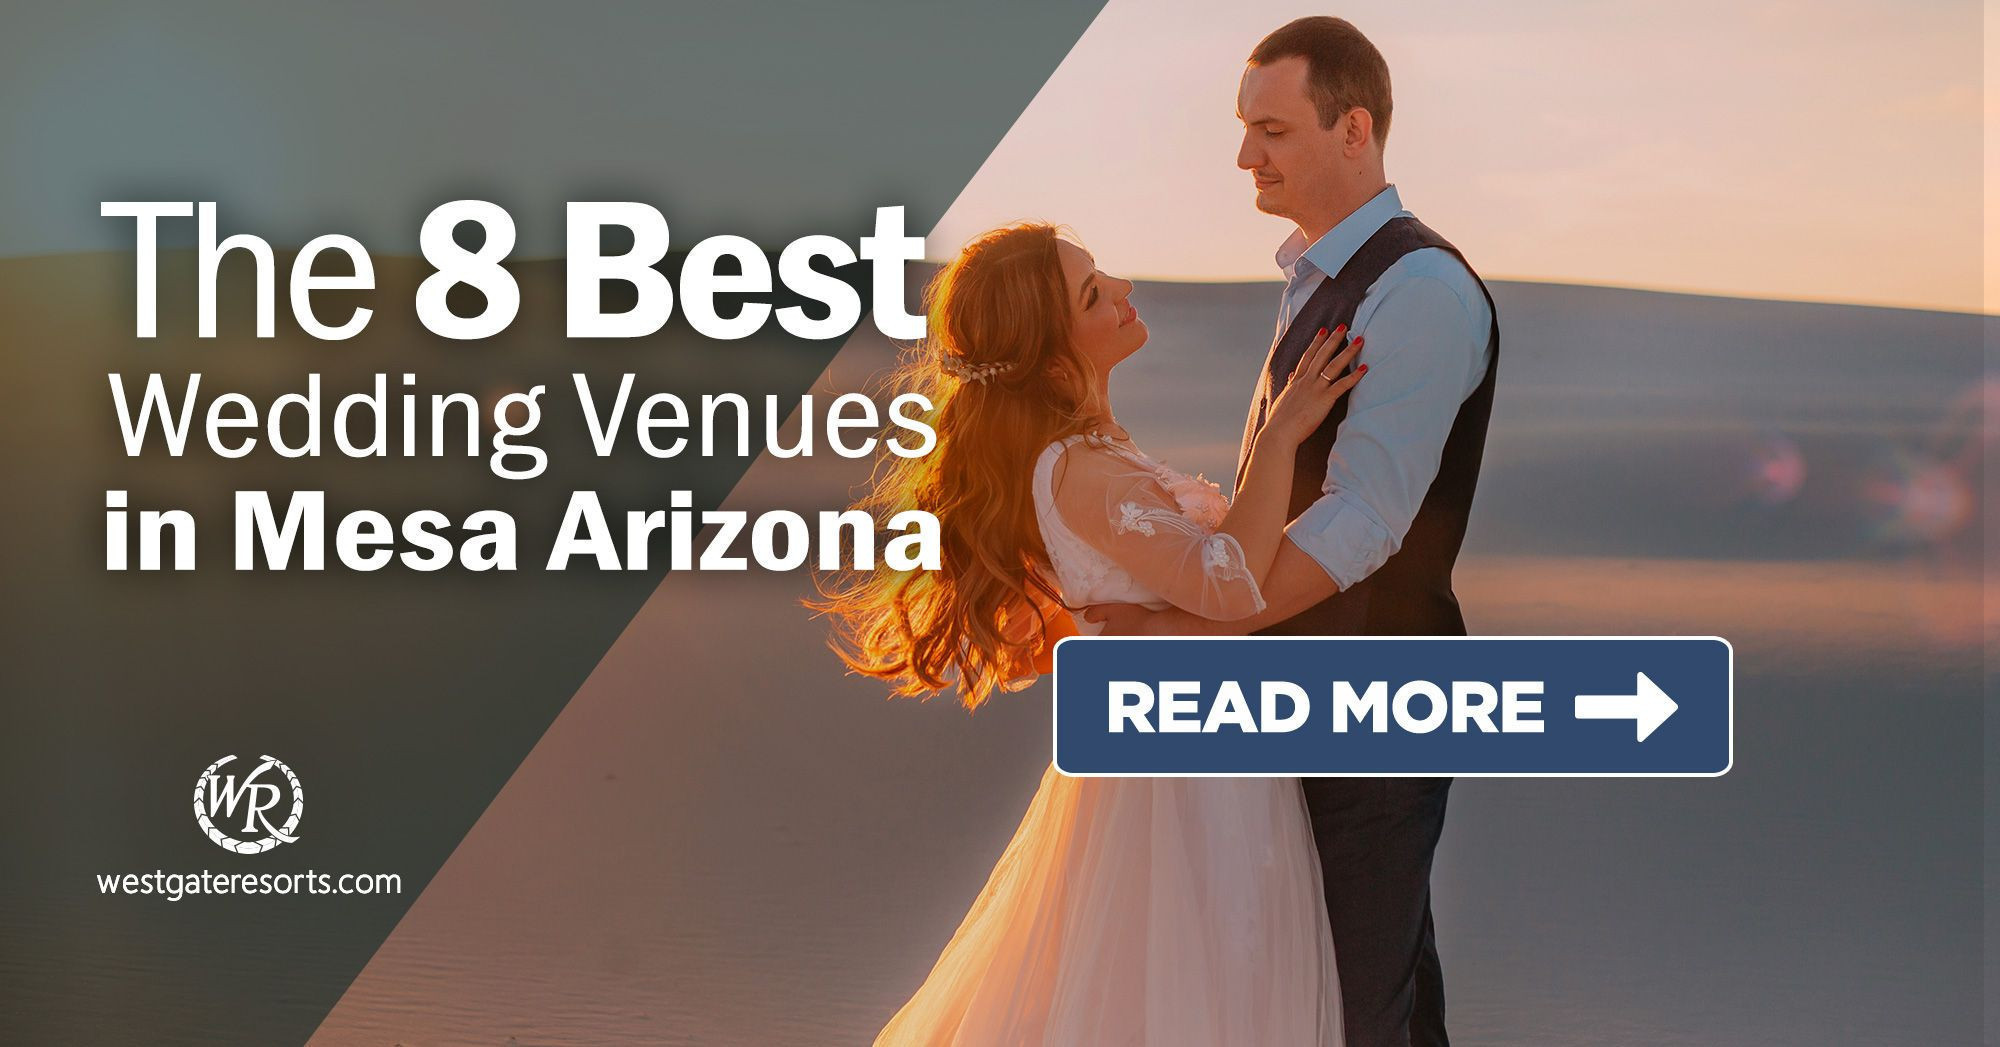 The 8 Top Wedding Venues in Mesa, Arizona